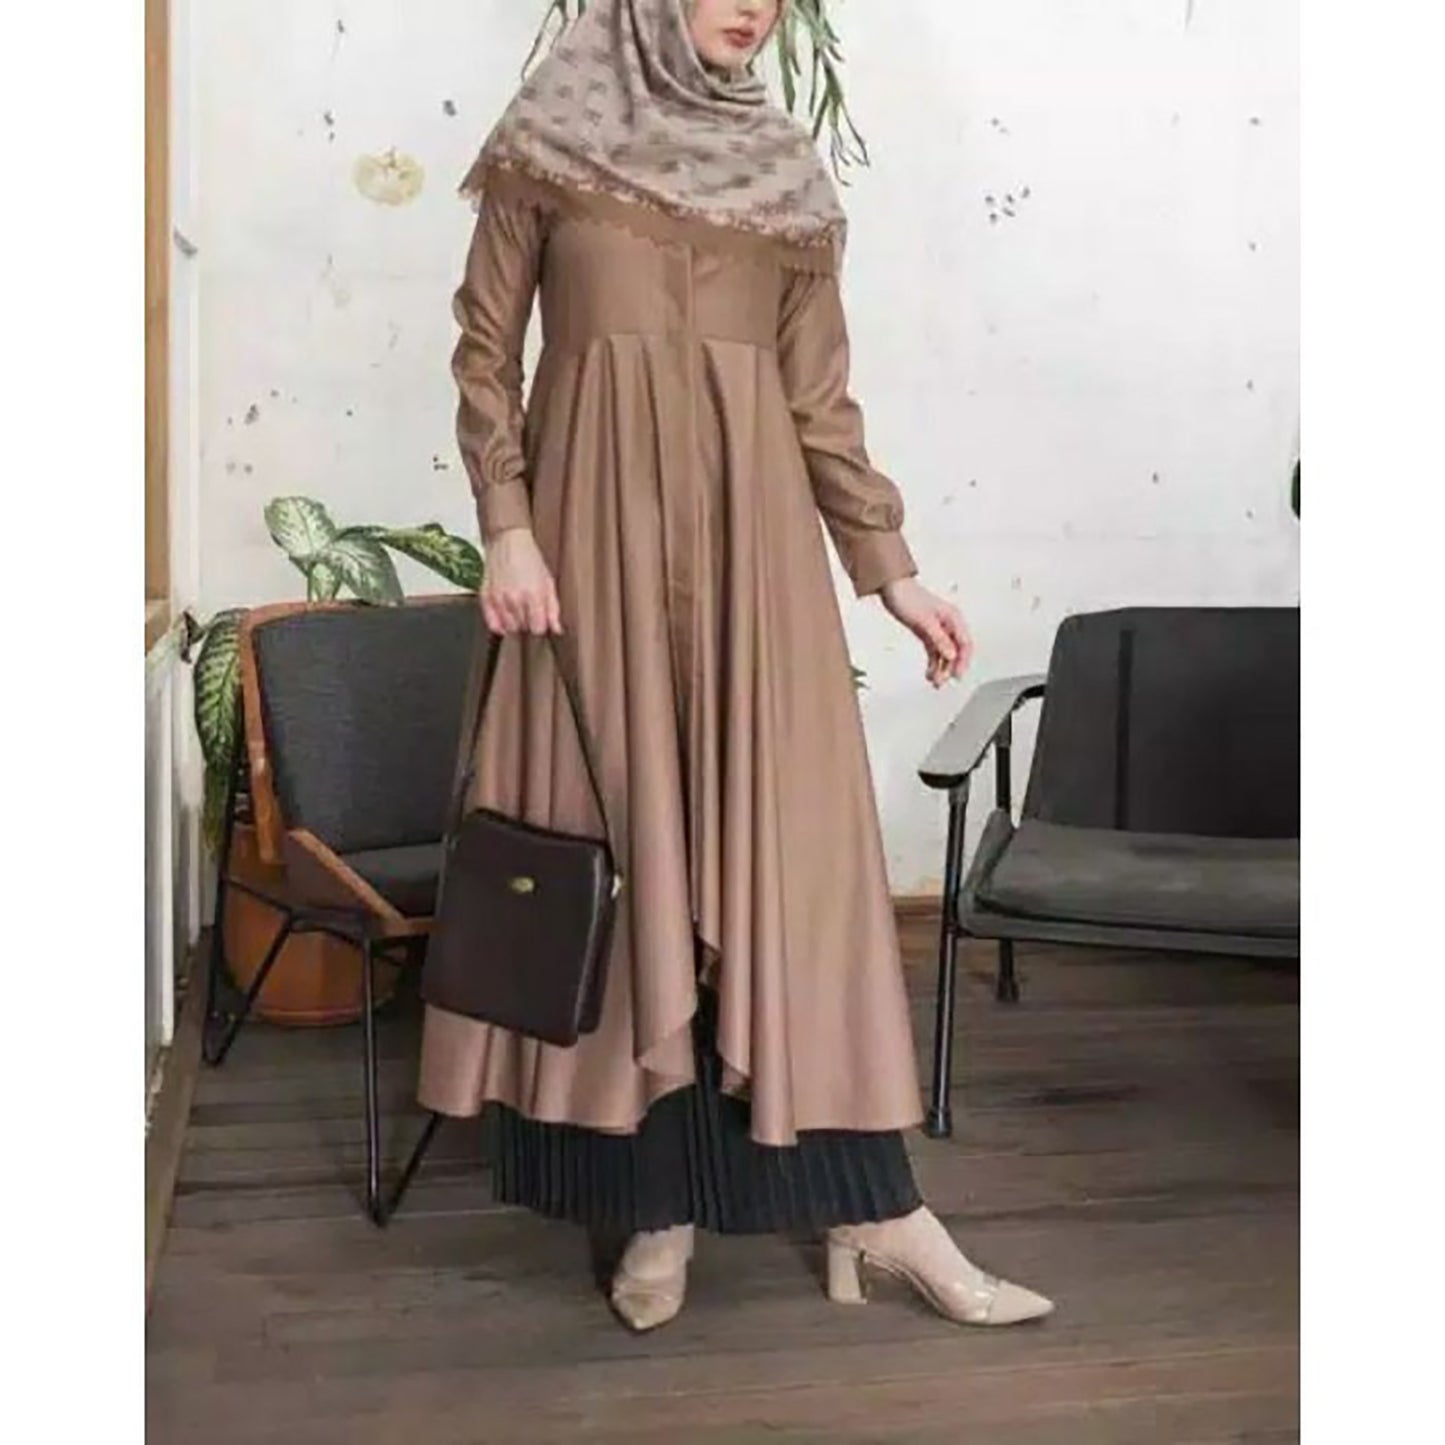 Elegance Contemporary Long Tunic for Women, Caftan, Islamic Dress, Caftan Dress, Burqa Dress, Muslim Dress